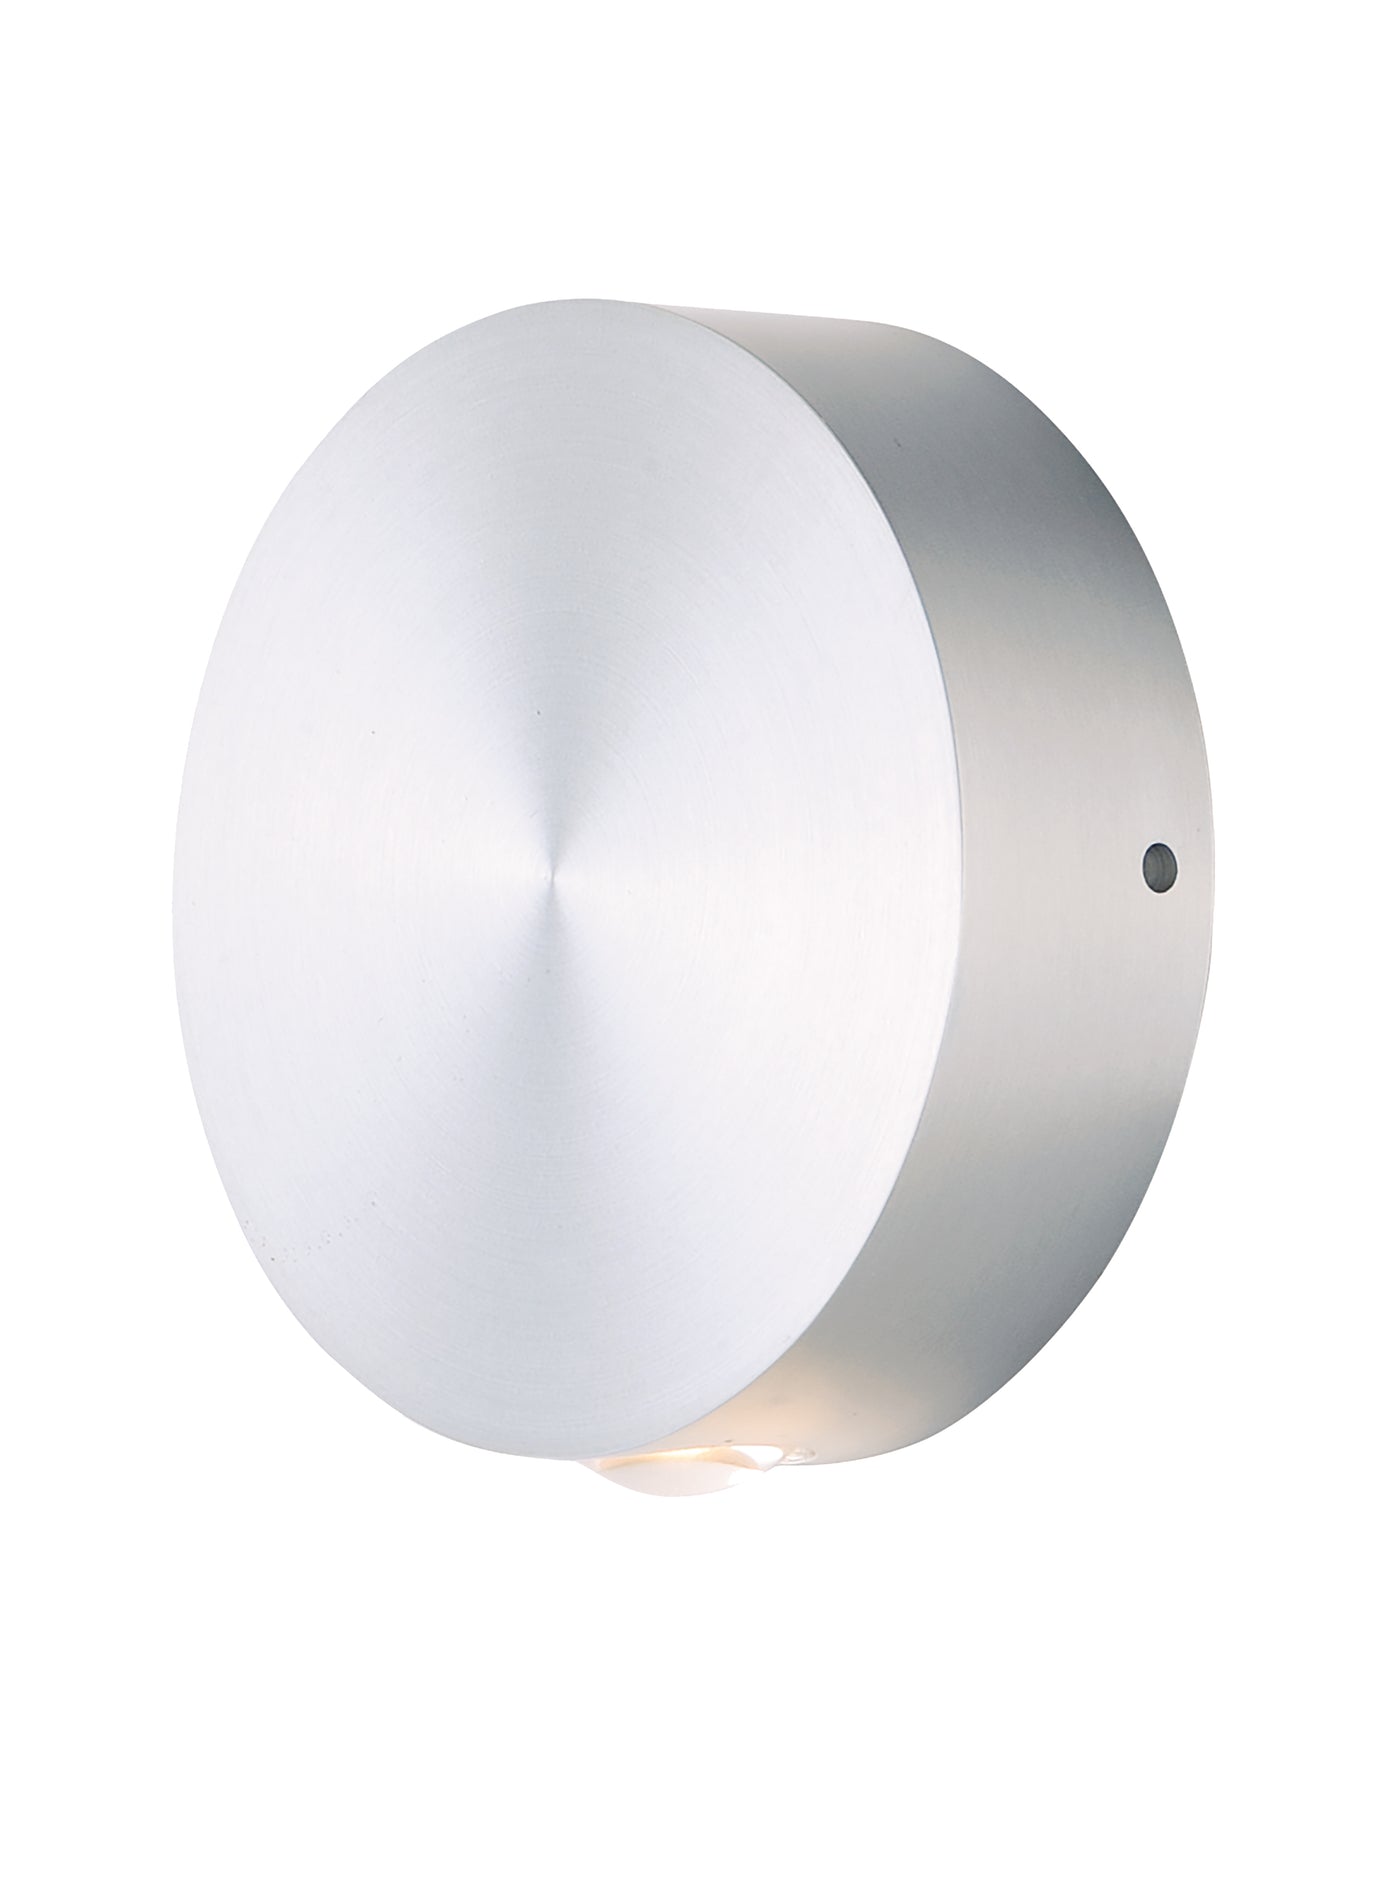  Alumilux LED Outdoor Wall Sconce E41540-SA Wall Sconce